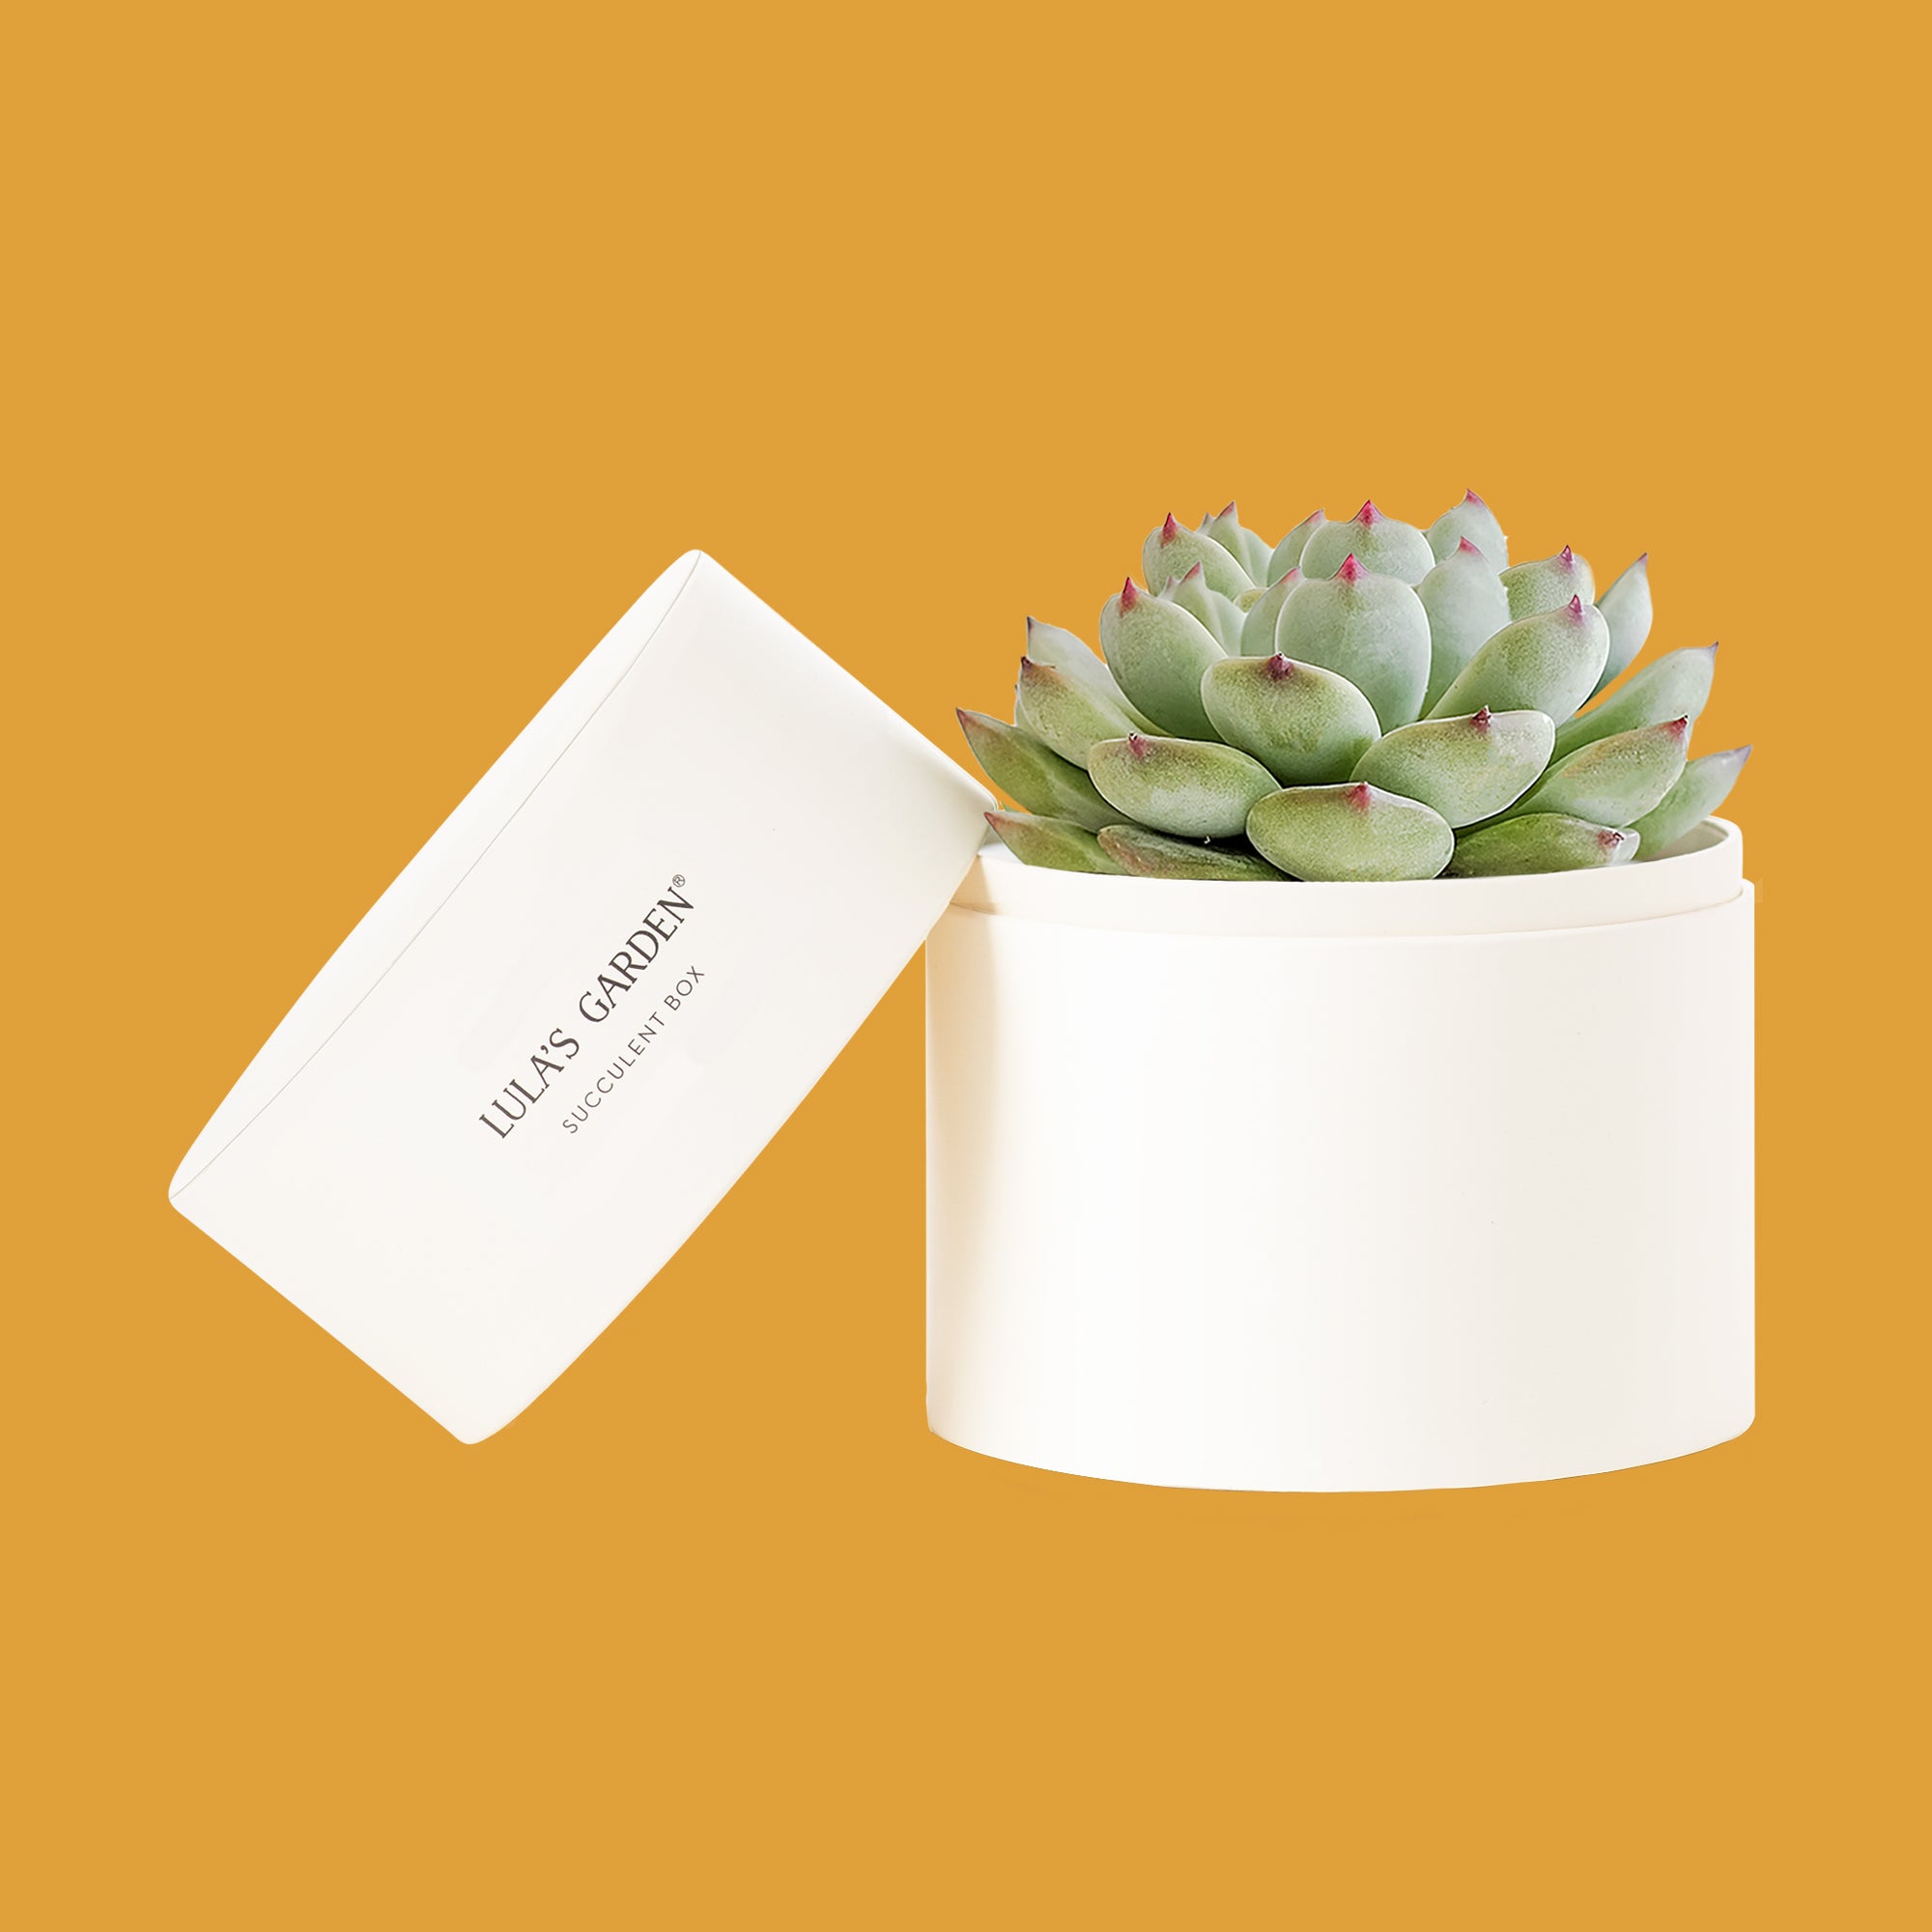 Lula’s Garden + Fresh Succulent in Gift Box